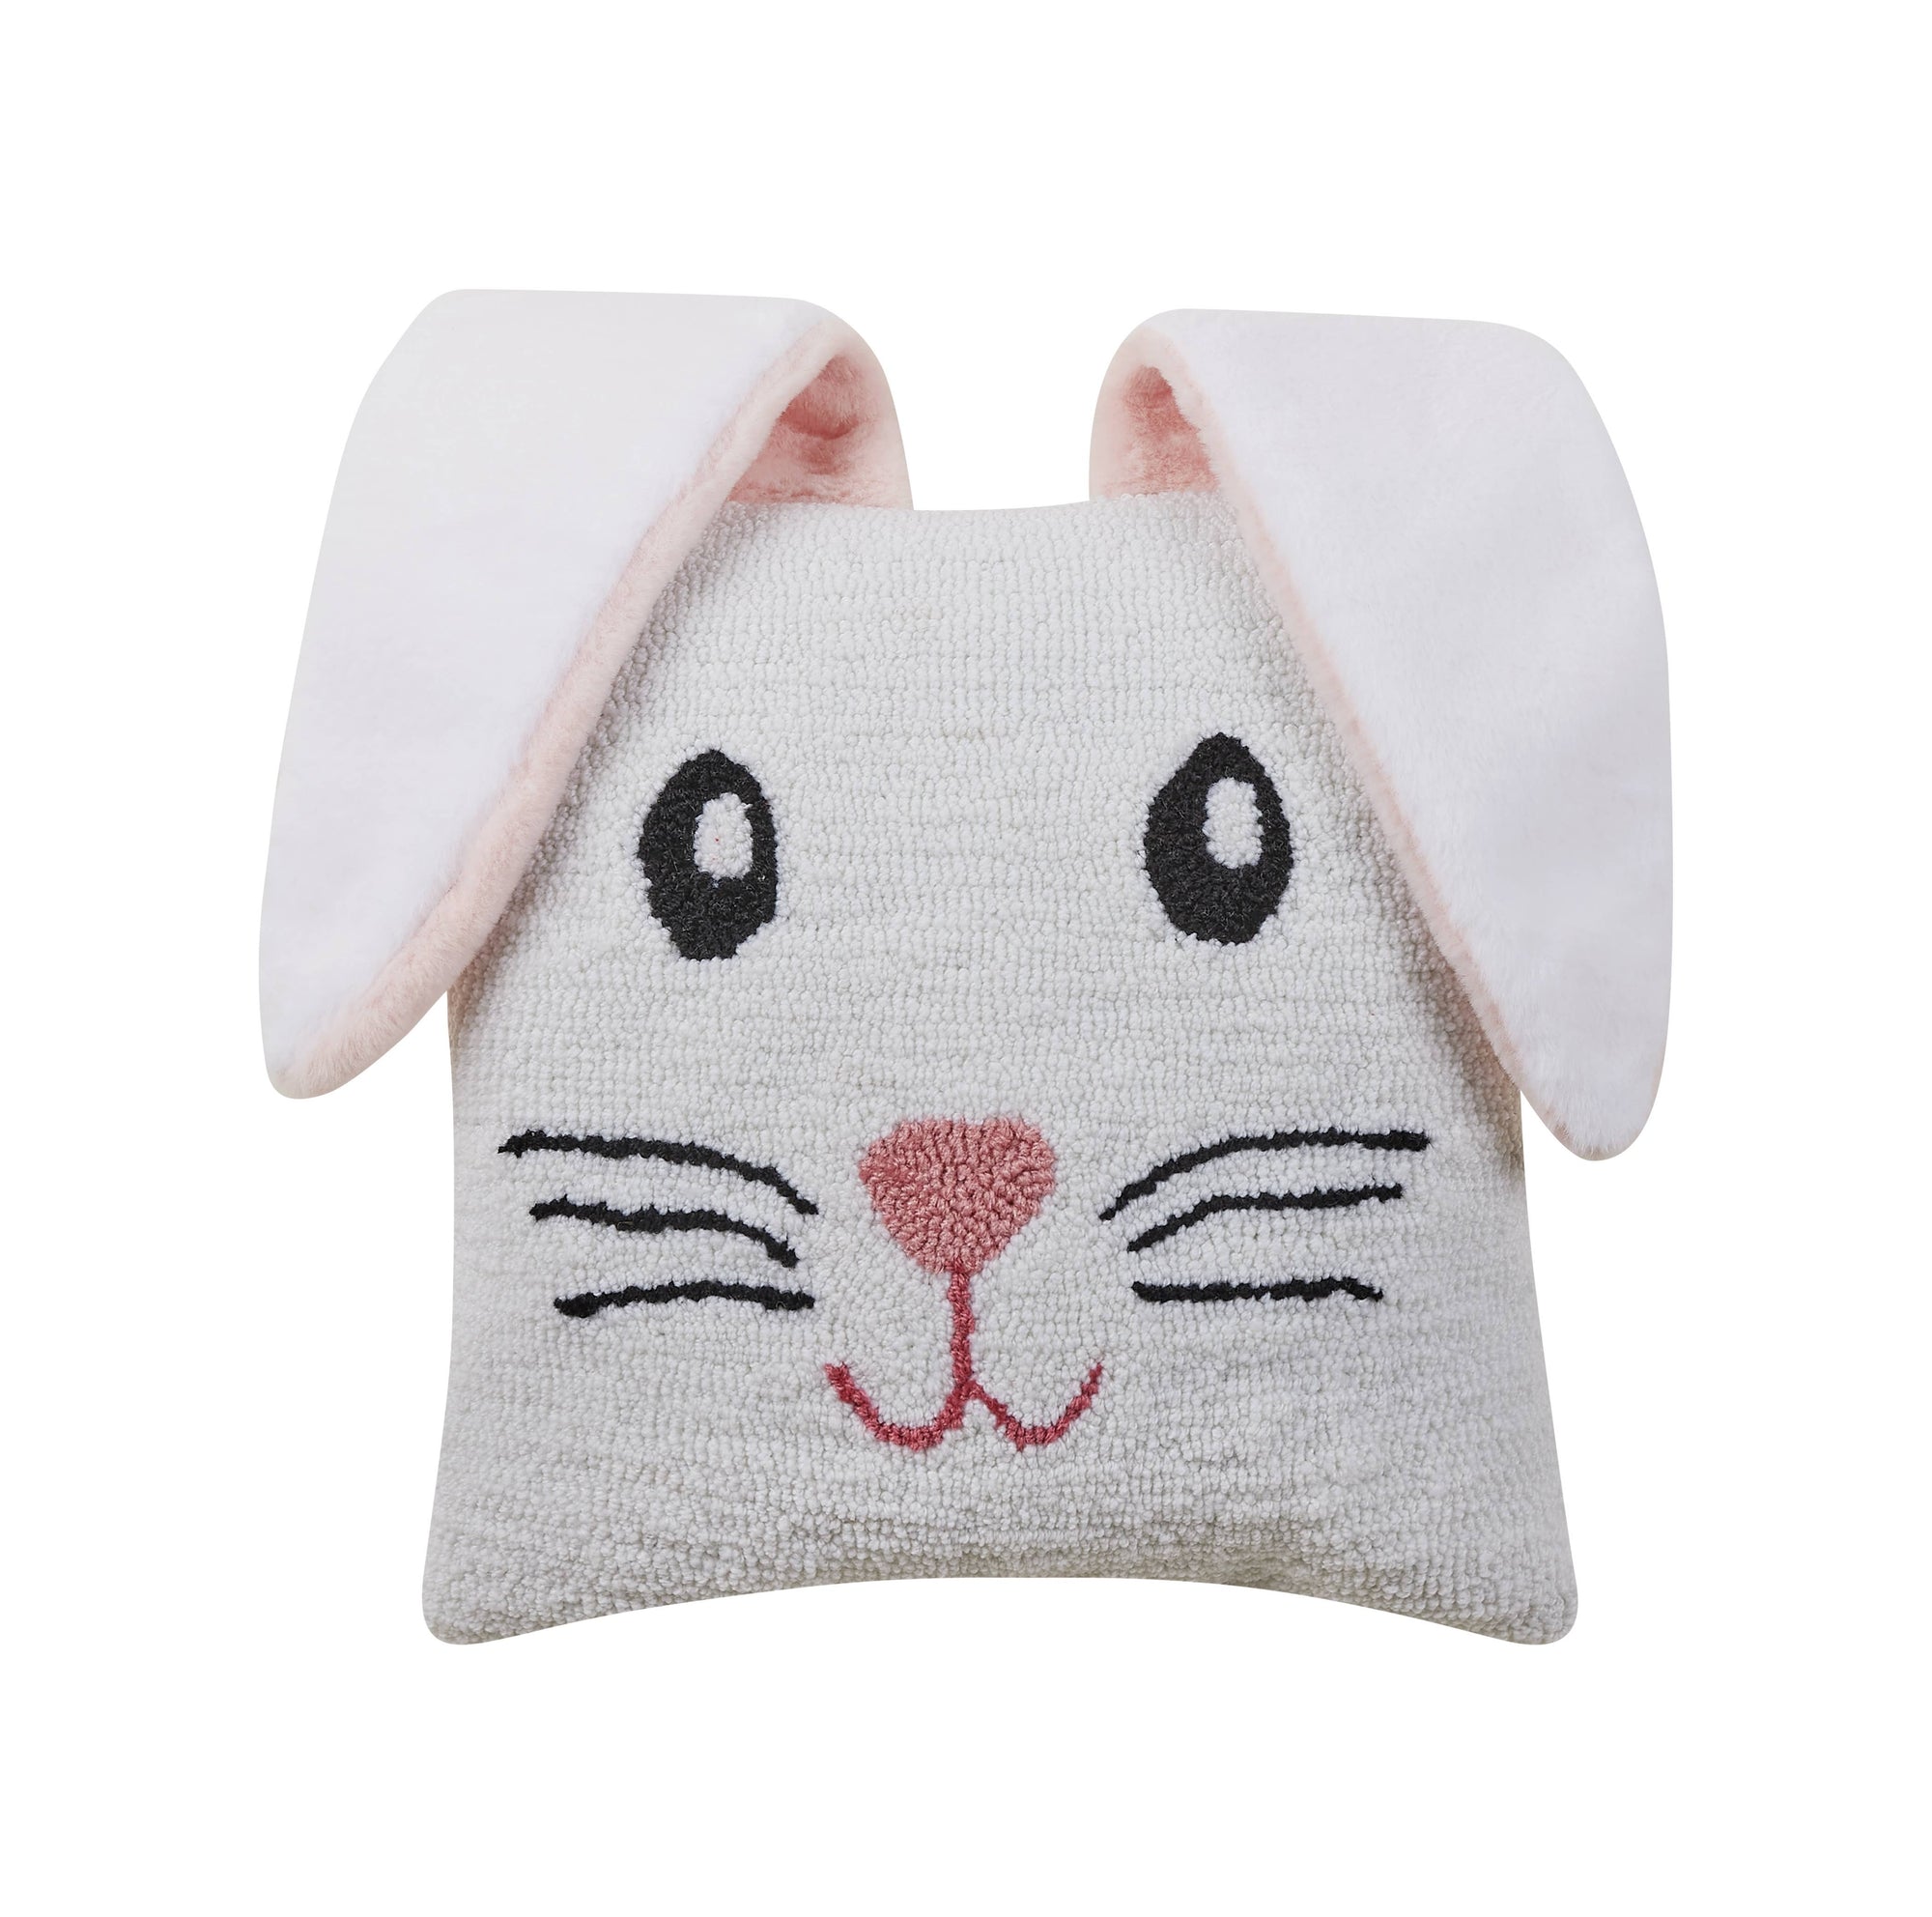 Bunny 3D Ears Hook Pillow - The Preppy Bunny